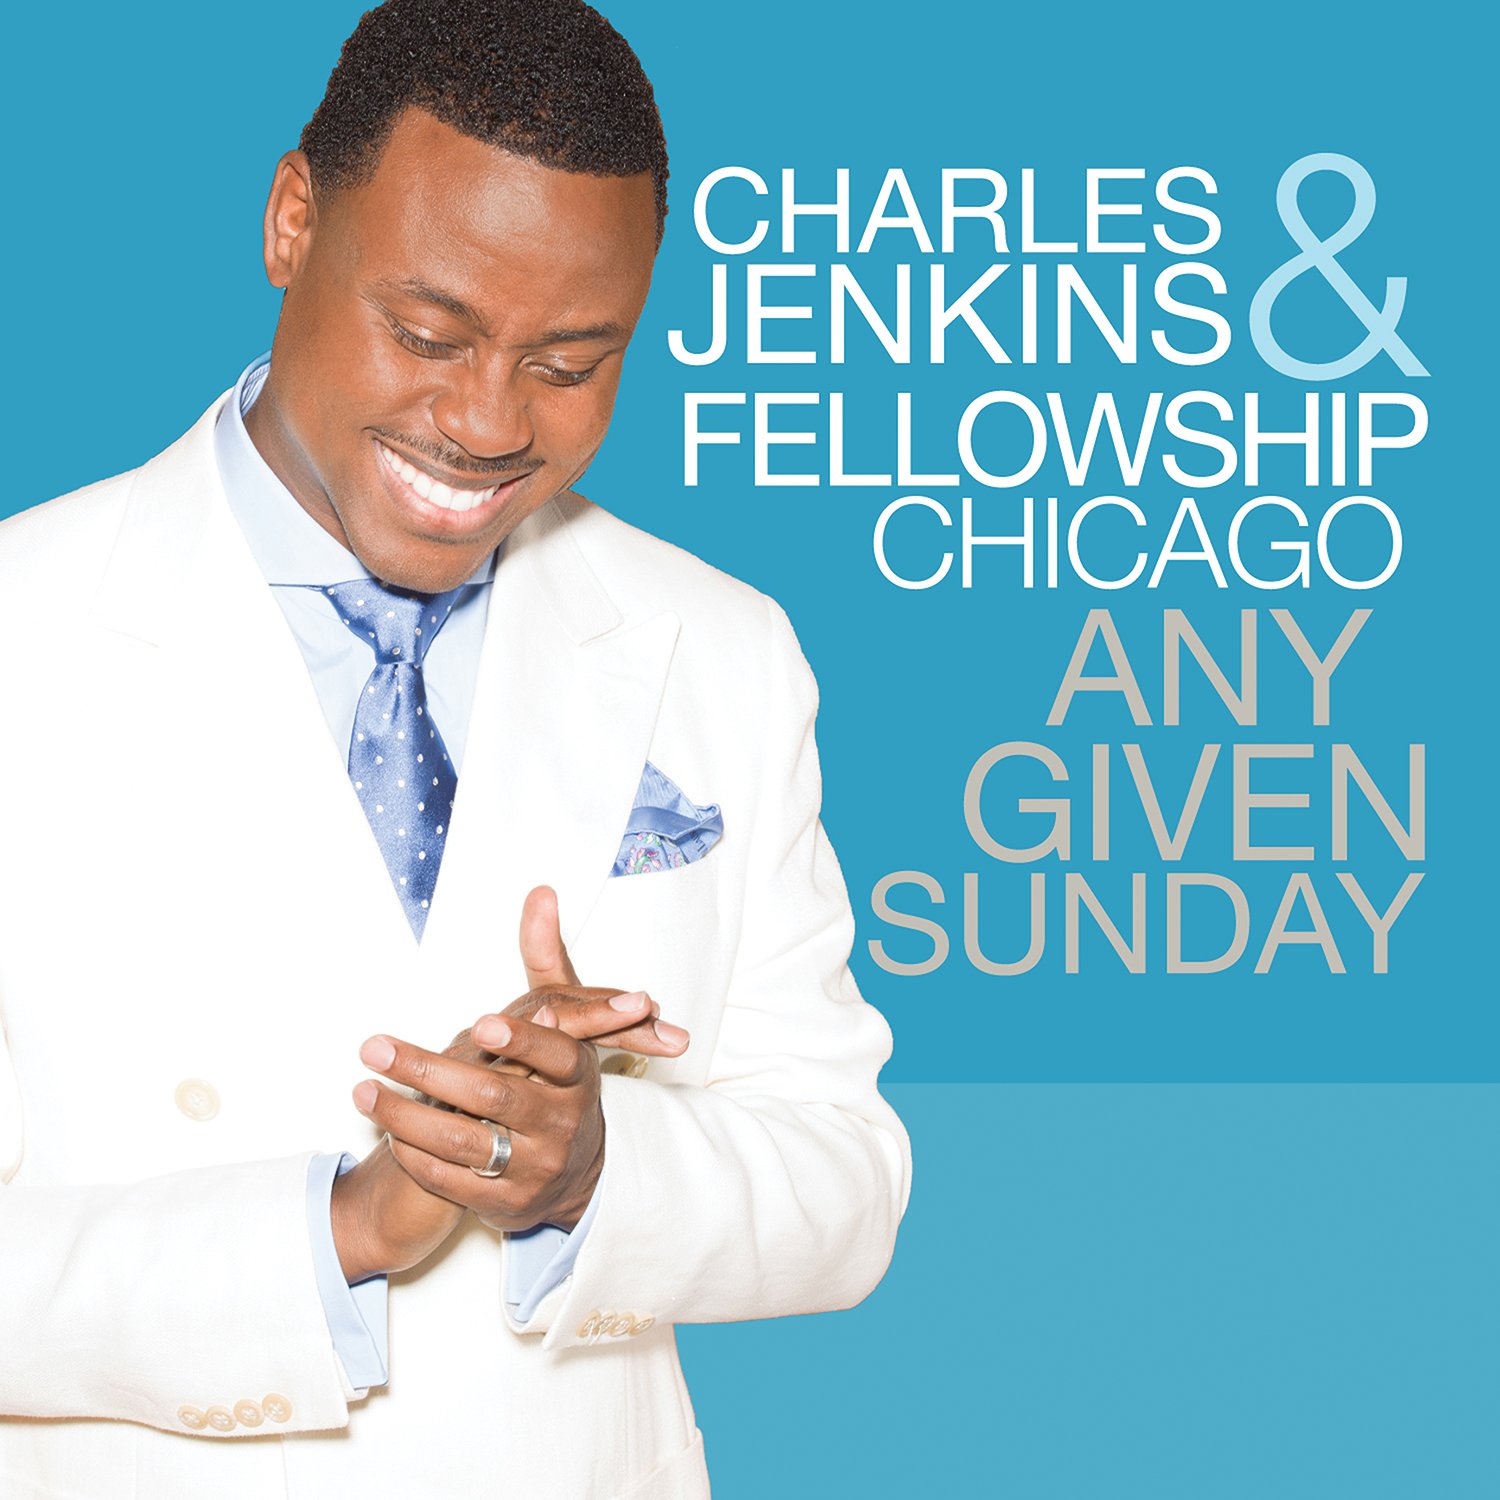 CHARLES JENKINS & FELLOWSHIP CHICAGO - ANY GIVEN SUNDAY